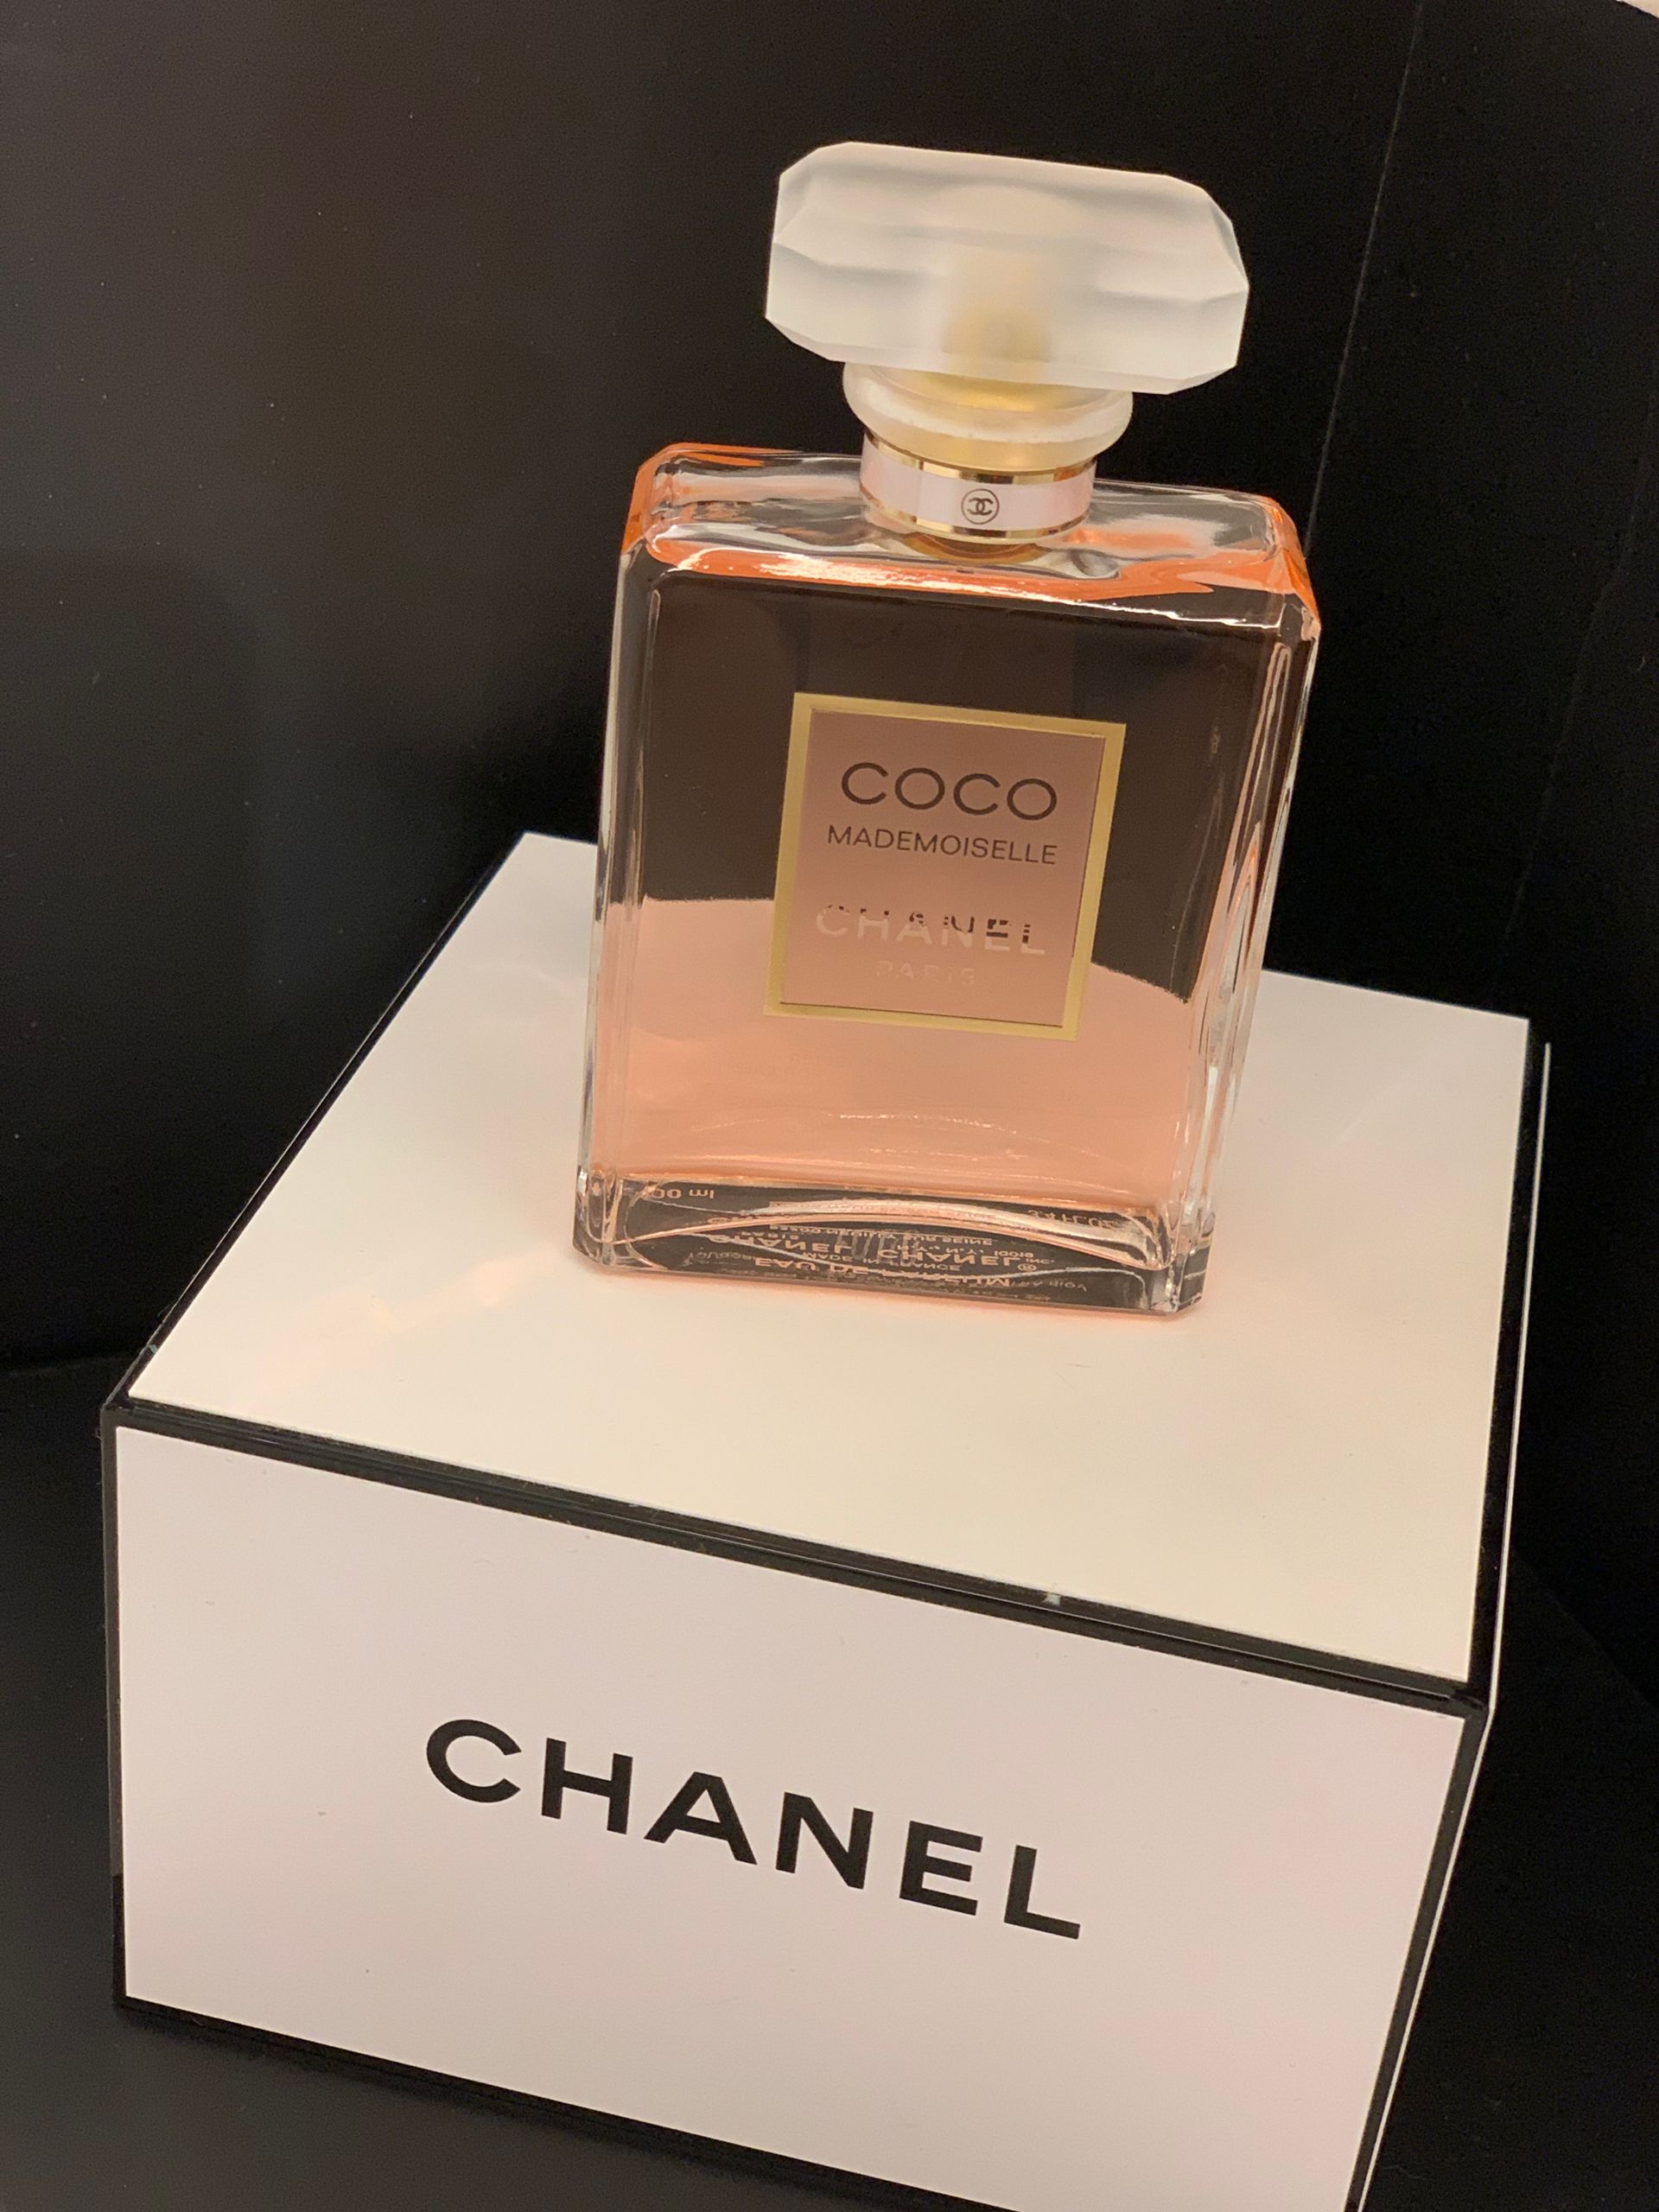 Macys Coco Chanel Mademoiselle Perfume Store   wwwnomastermitasycarcomacom 1691654494